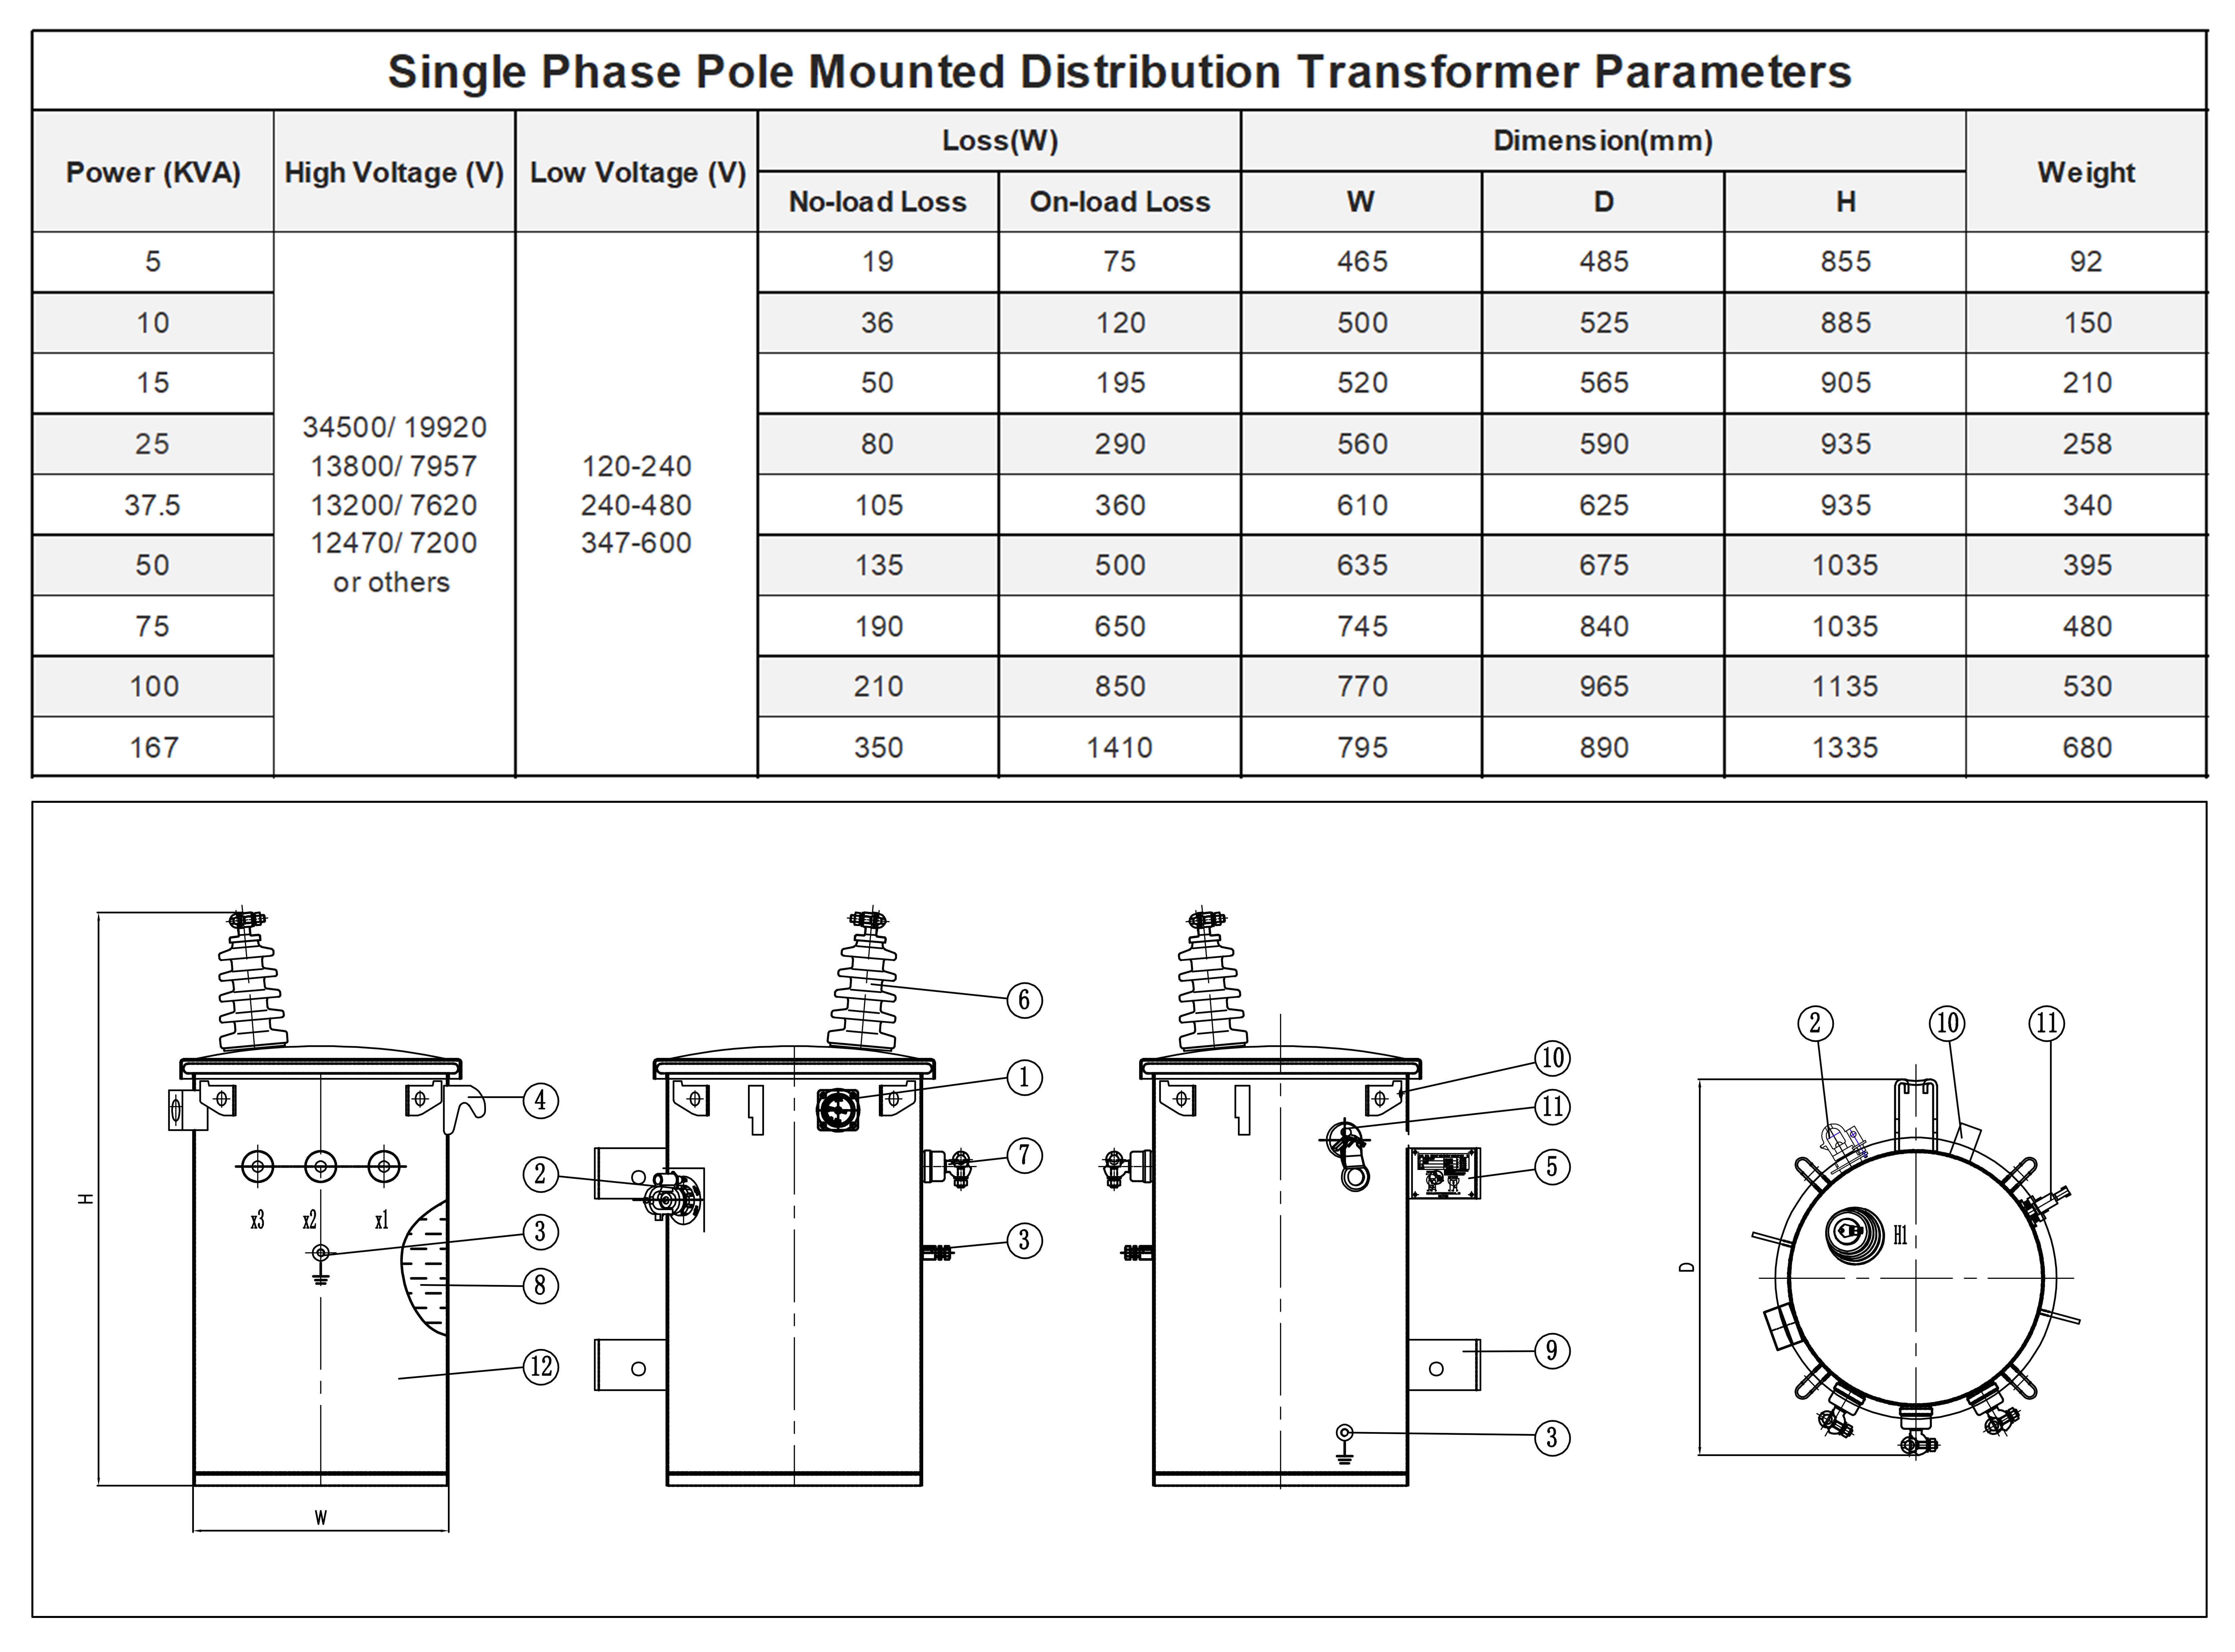 5kVA Single Phase Pole Mounted Distribution Transformer